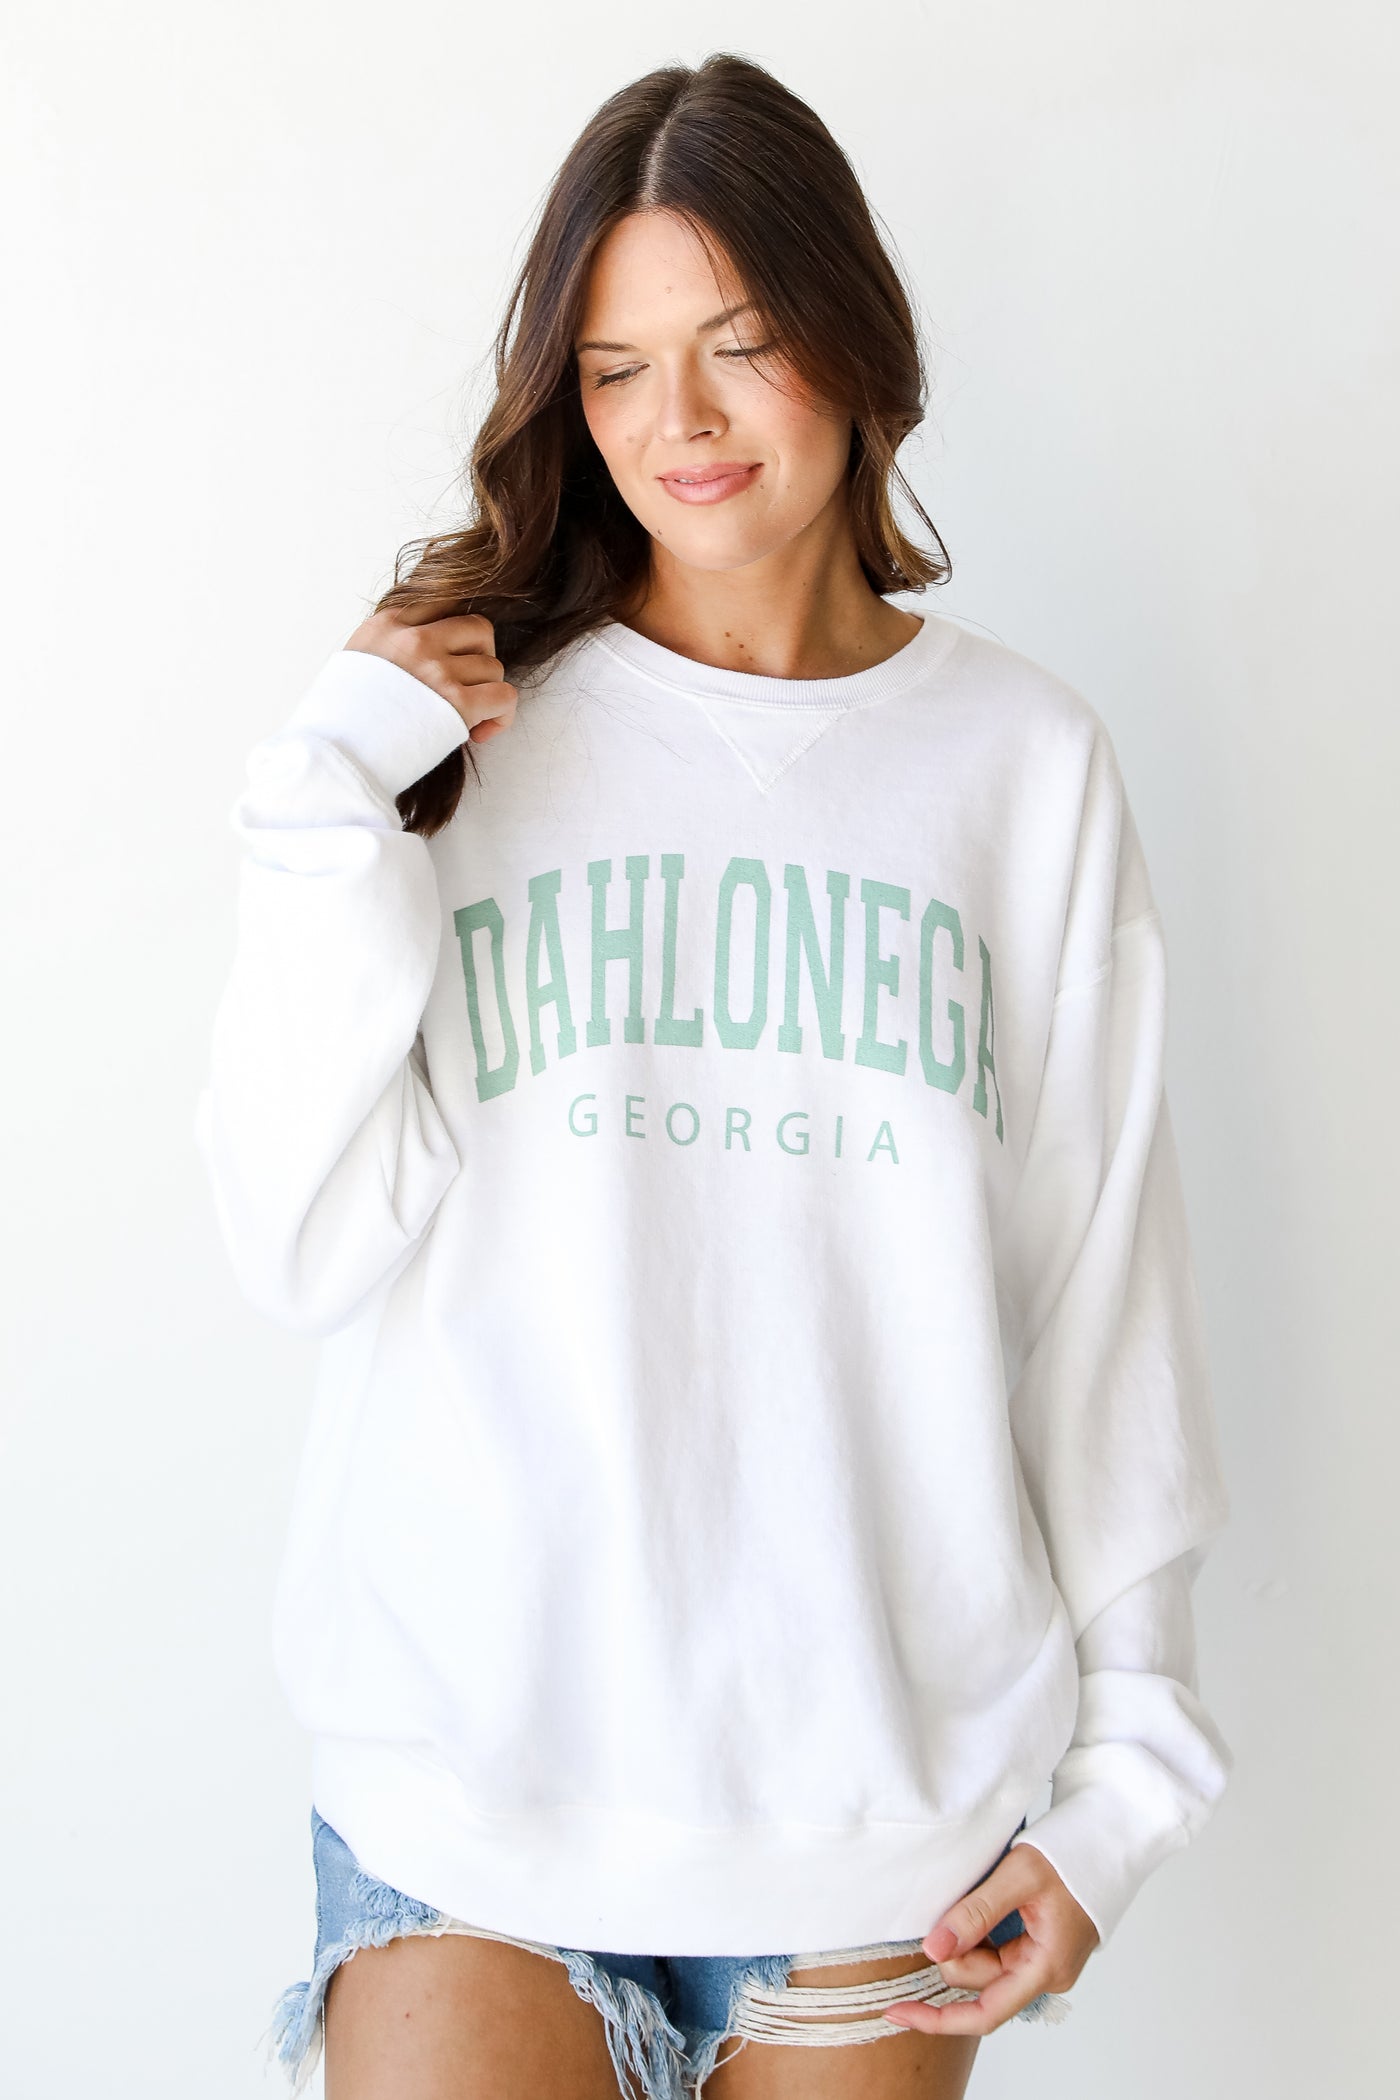 White Dahlonega Georgia Pullover. Graphic Sweatshirt. Oversized Comfy Sweatshirt